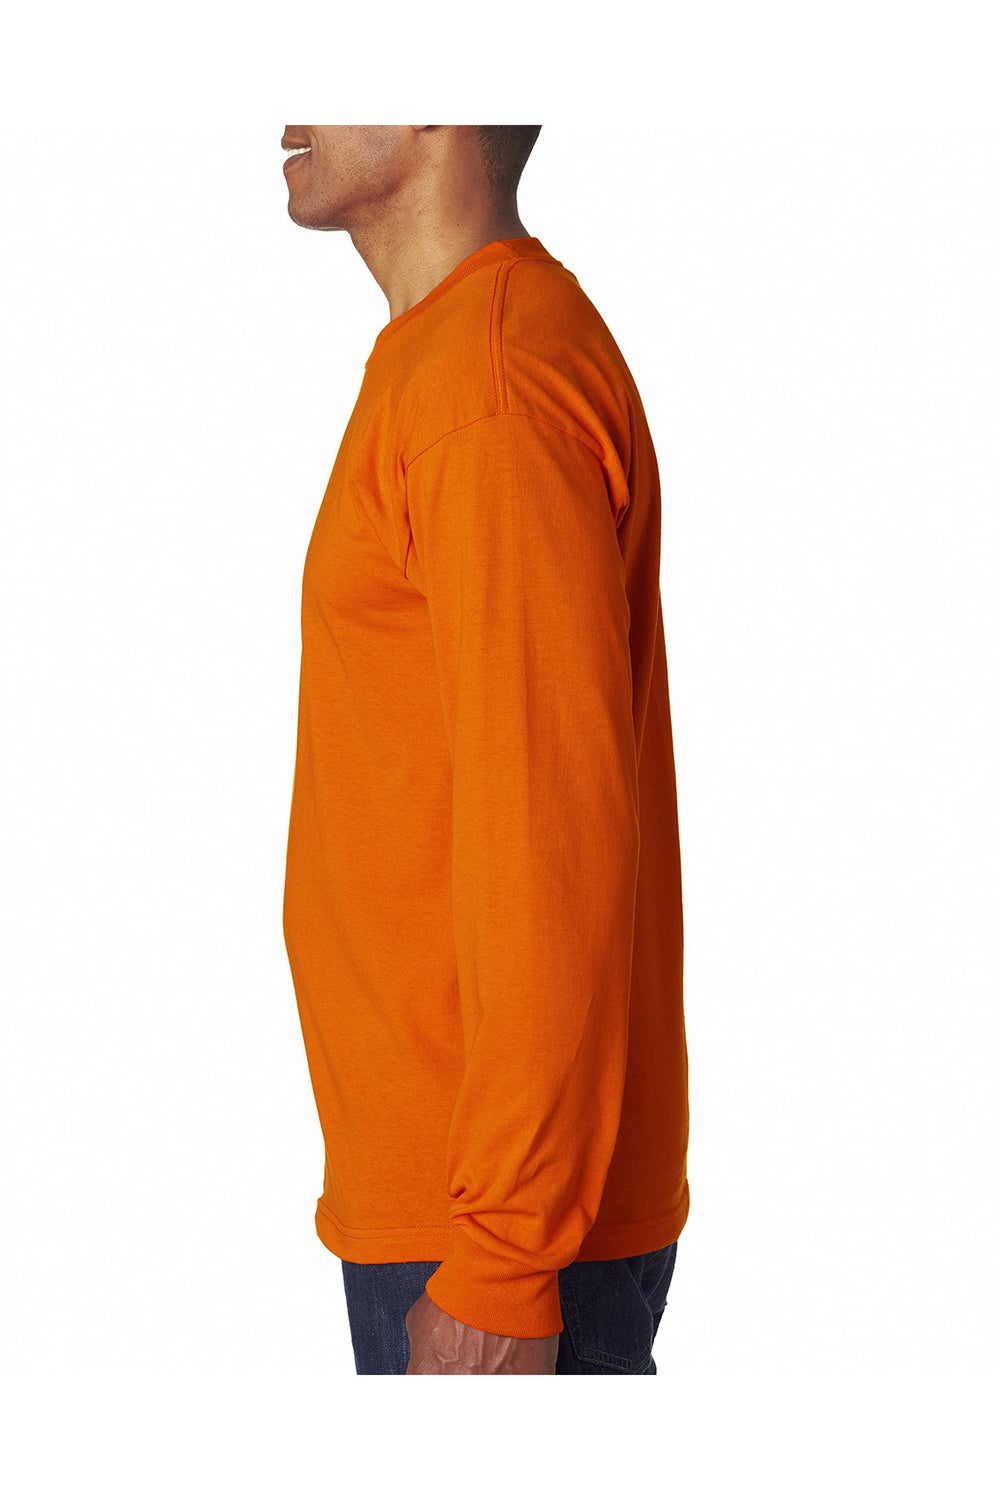 Bayside BA6100 Mens USA Made Long Sleeve Crewneck T-Shirt Bright Orange Model Side